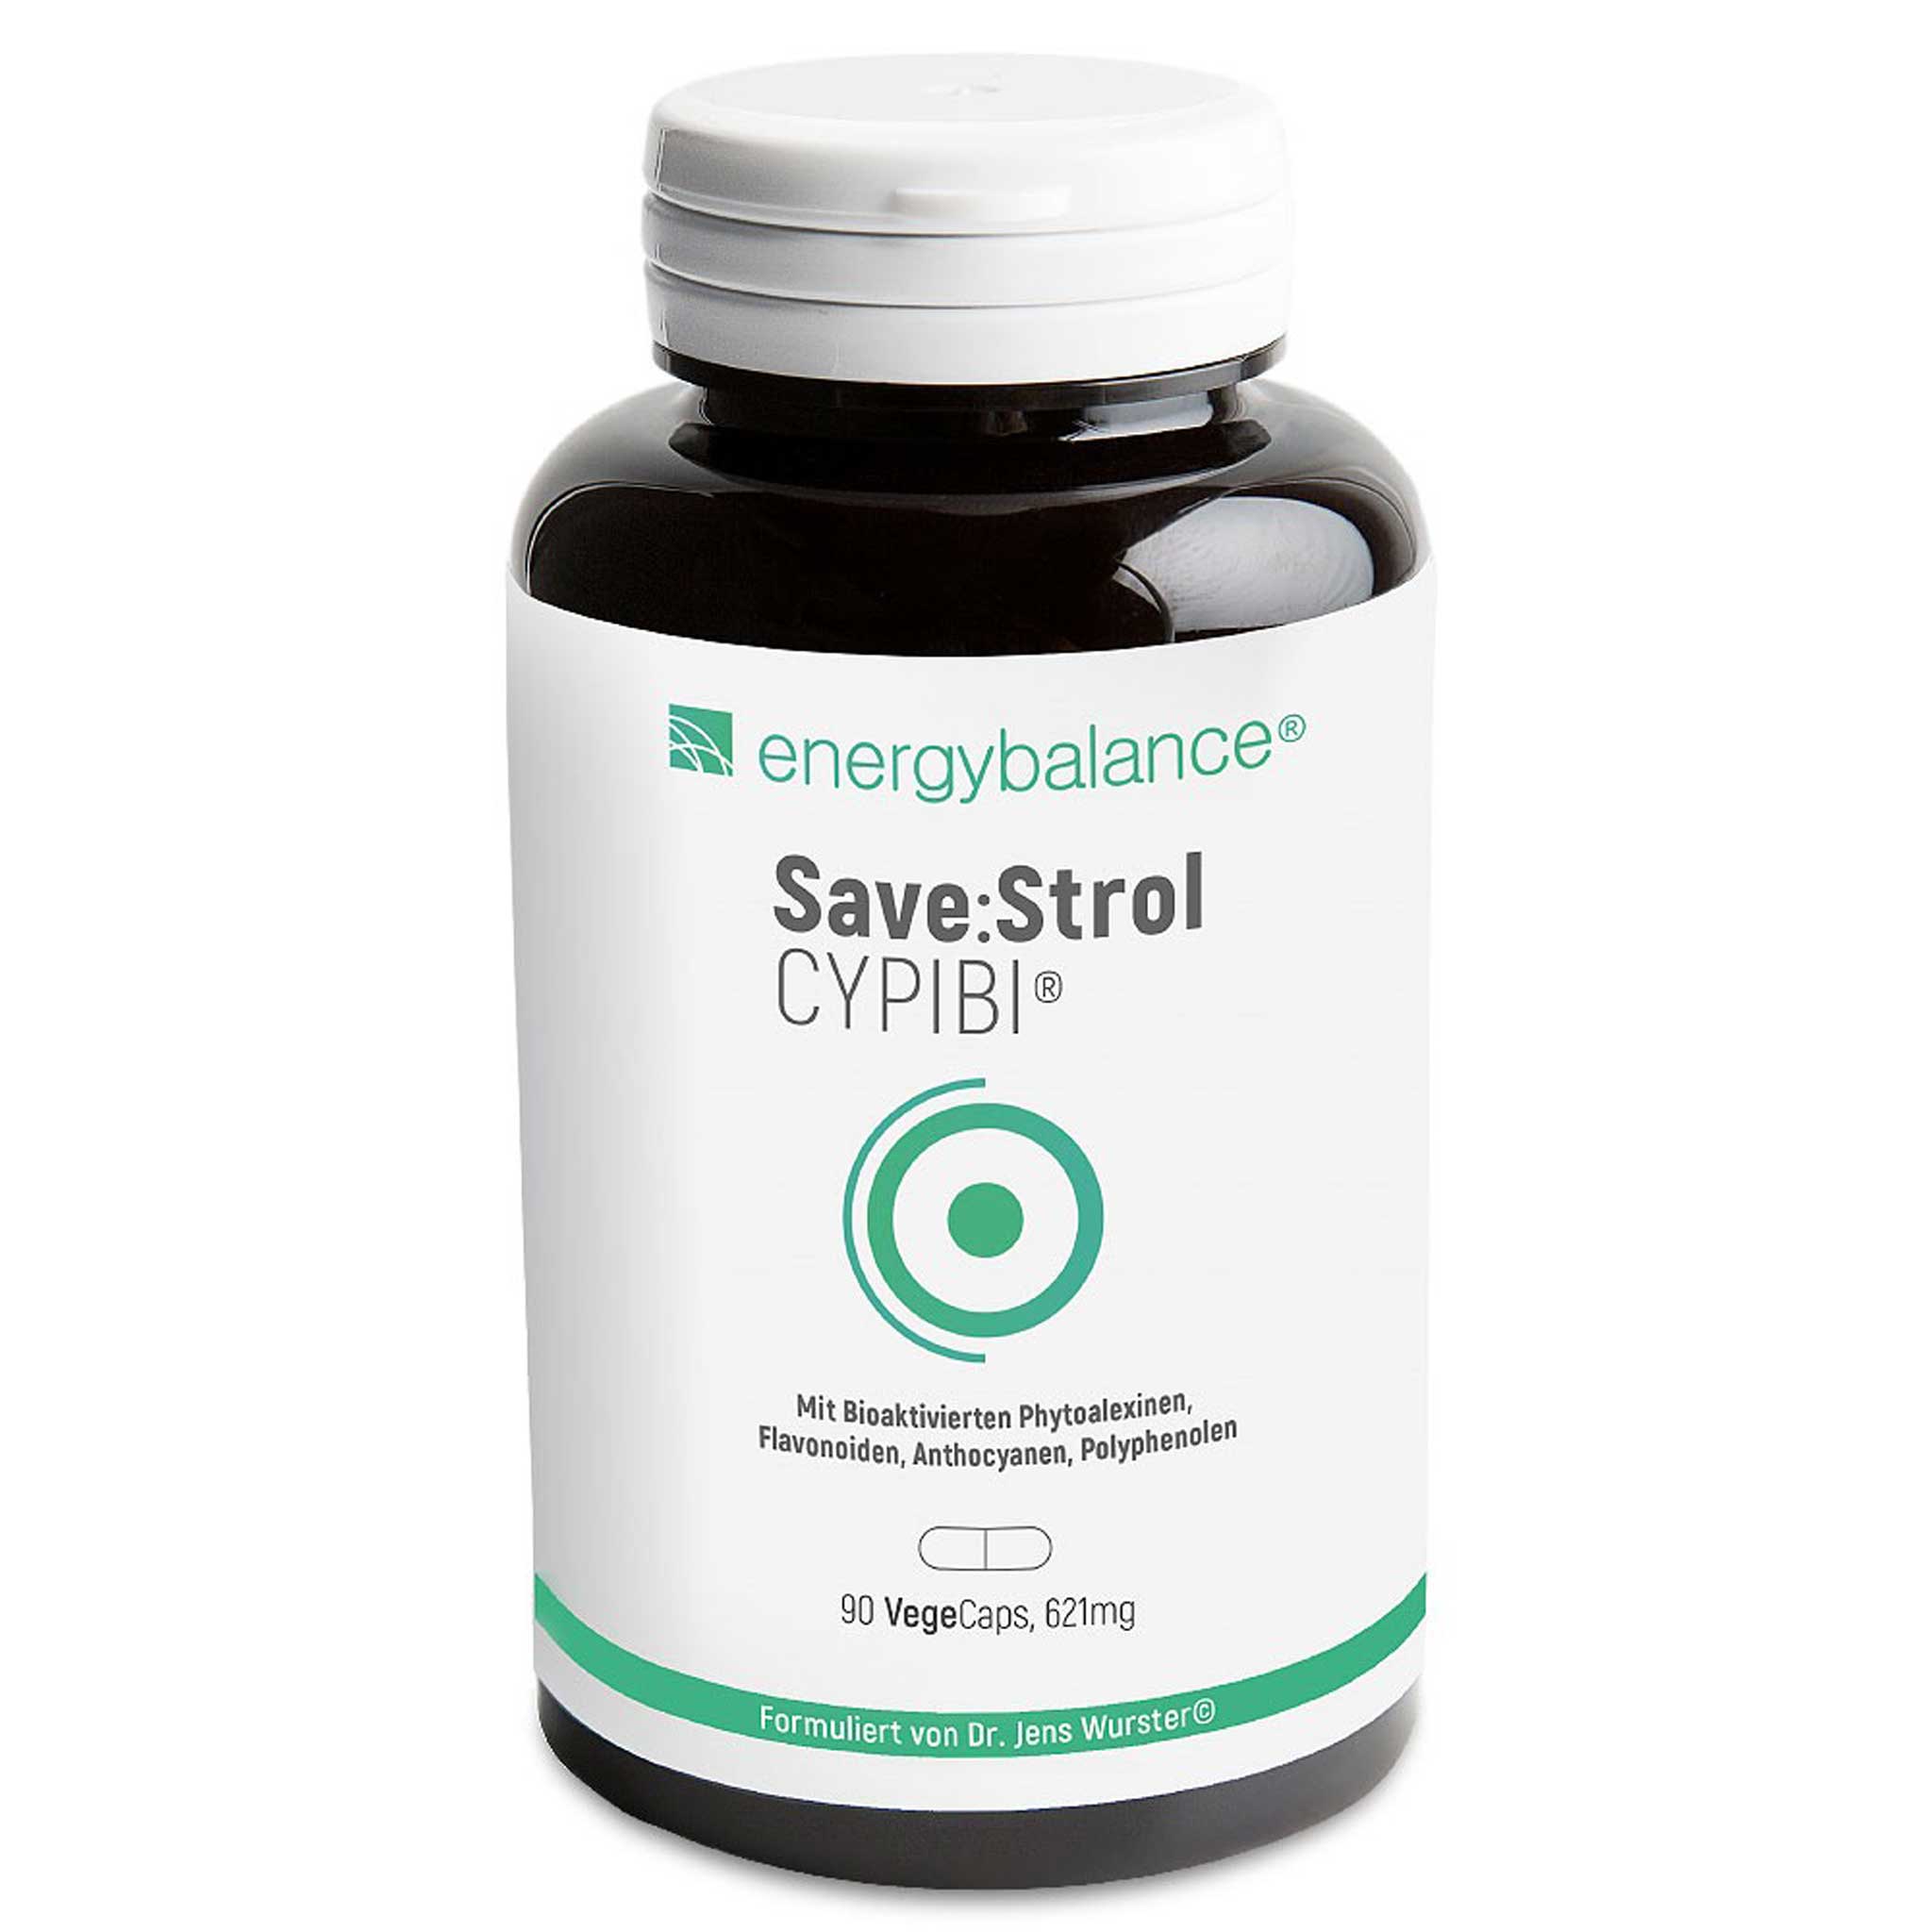 Save:Strol CYP1B1 Immune Support, 90 Kapseln